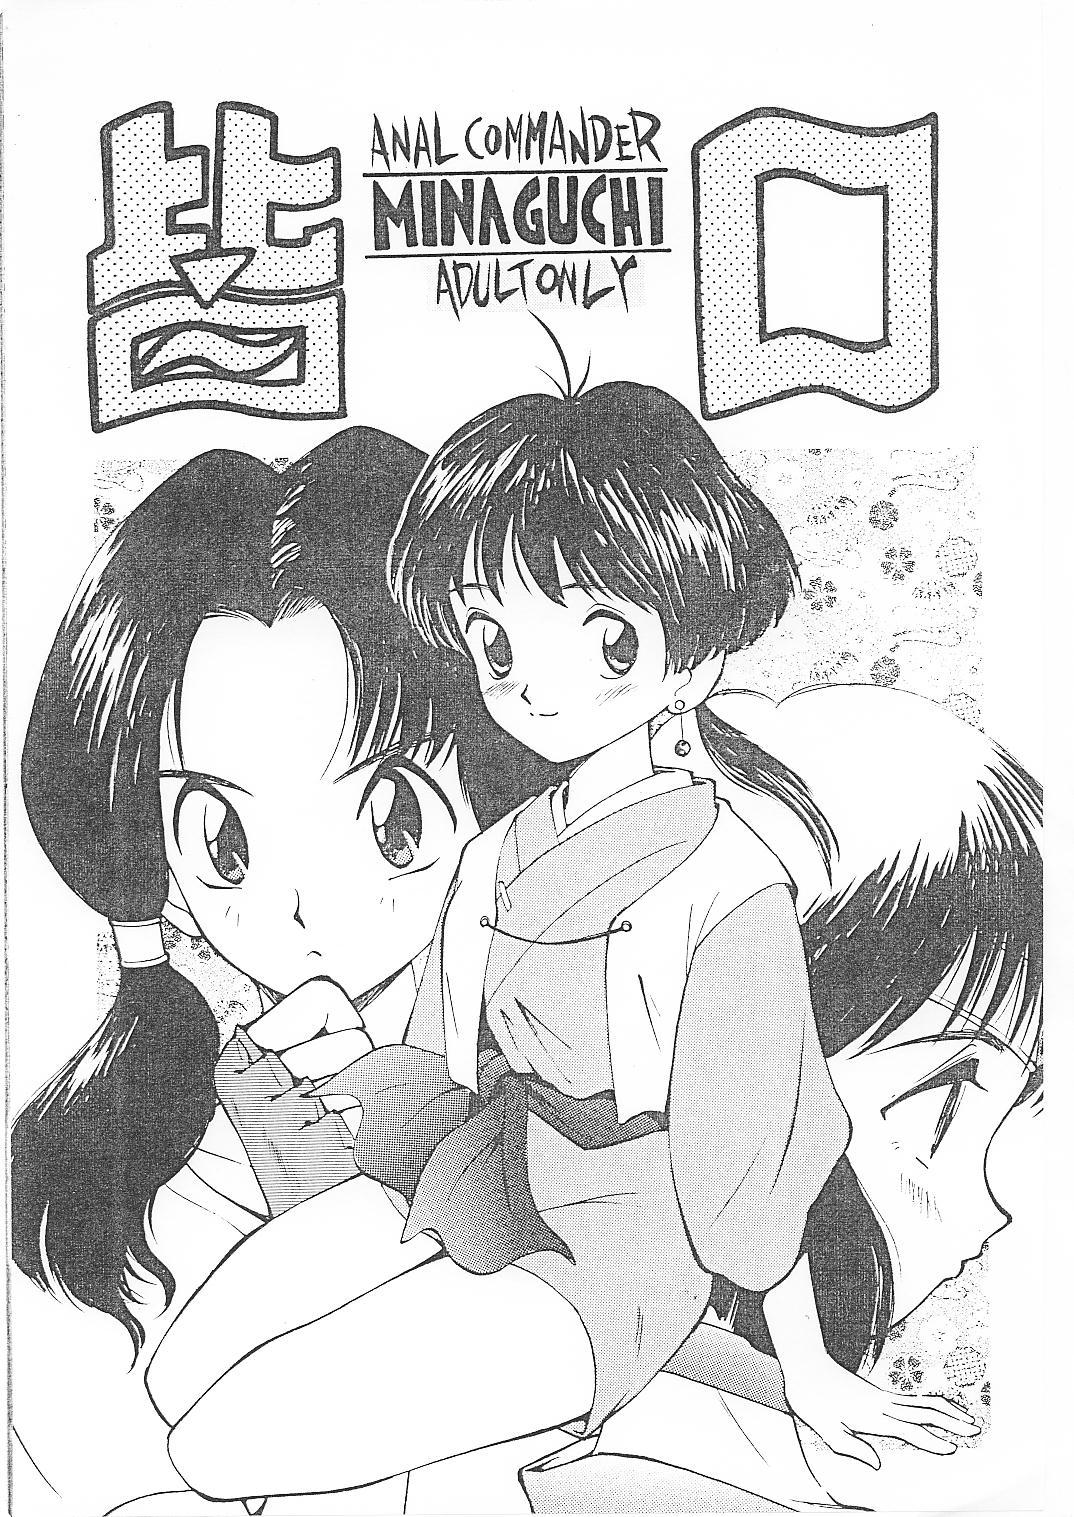 Transexual Minaguchi - Anal Commander Minaguchi - Sailor moon Dragon ball z Final fantasy Jizz - Page 1